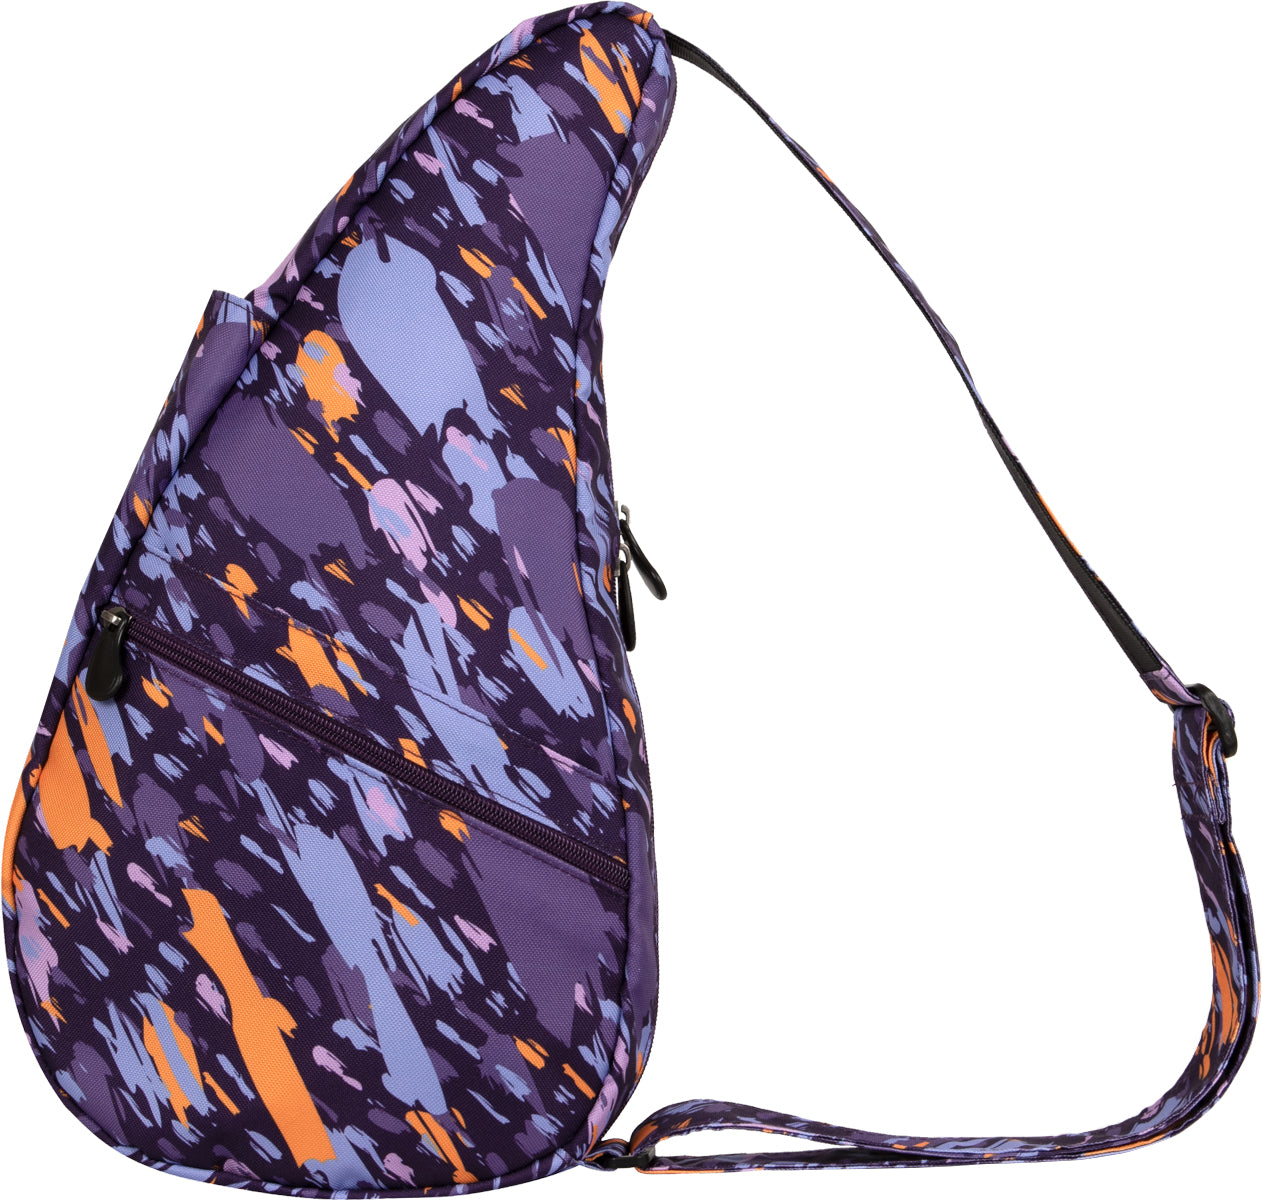 AmeriBag Small Healthy Back Bag Tote Prints and Patterns (Splash Purple)